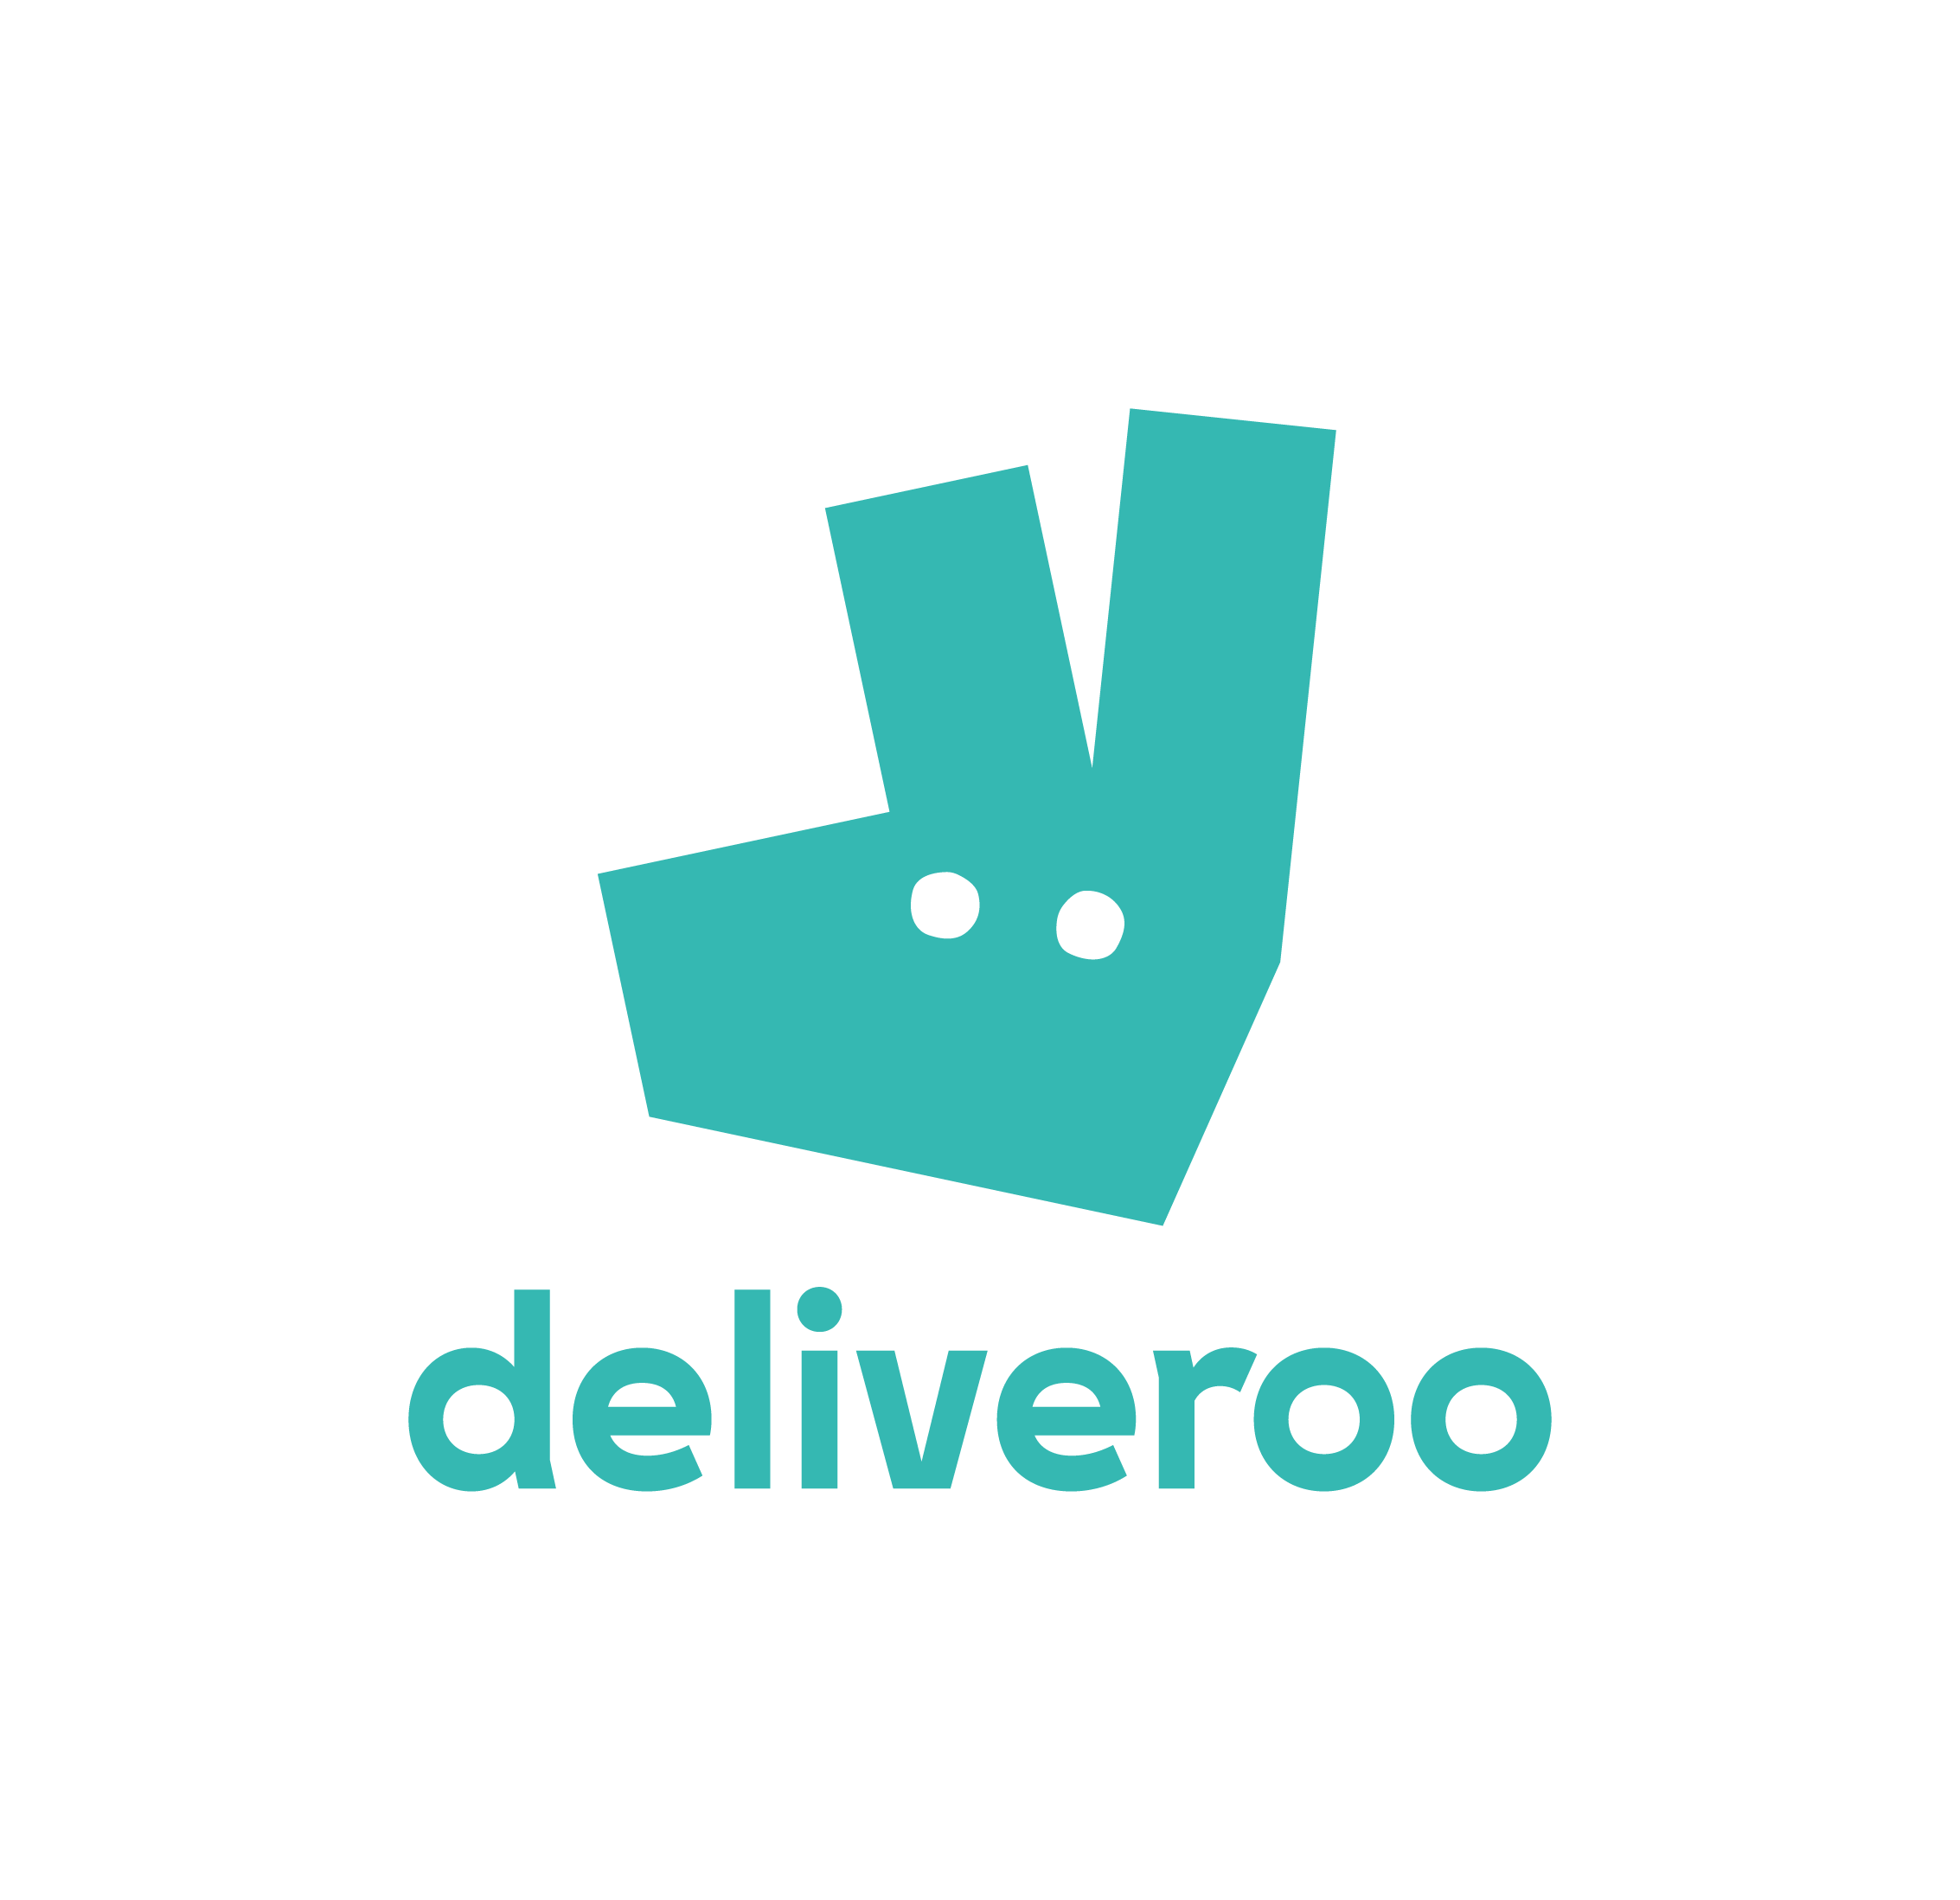 Teal Logo - Deliveroo unveils new kangaroo as part of rebrand – Design Week